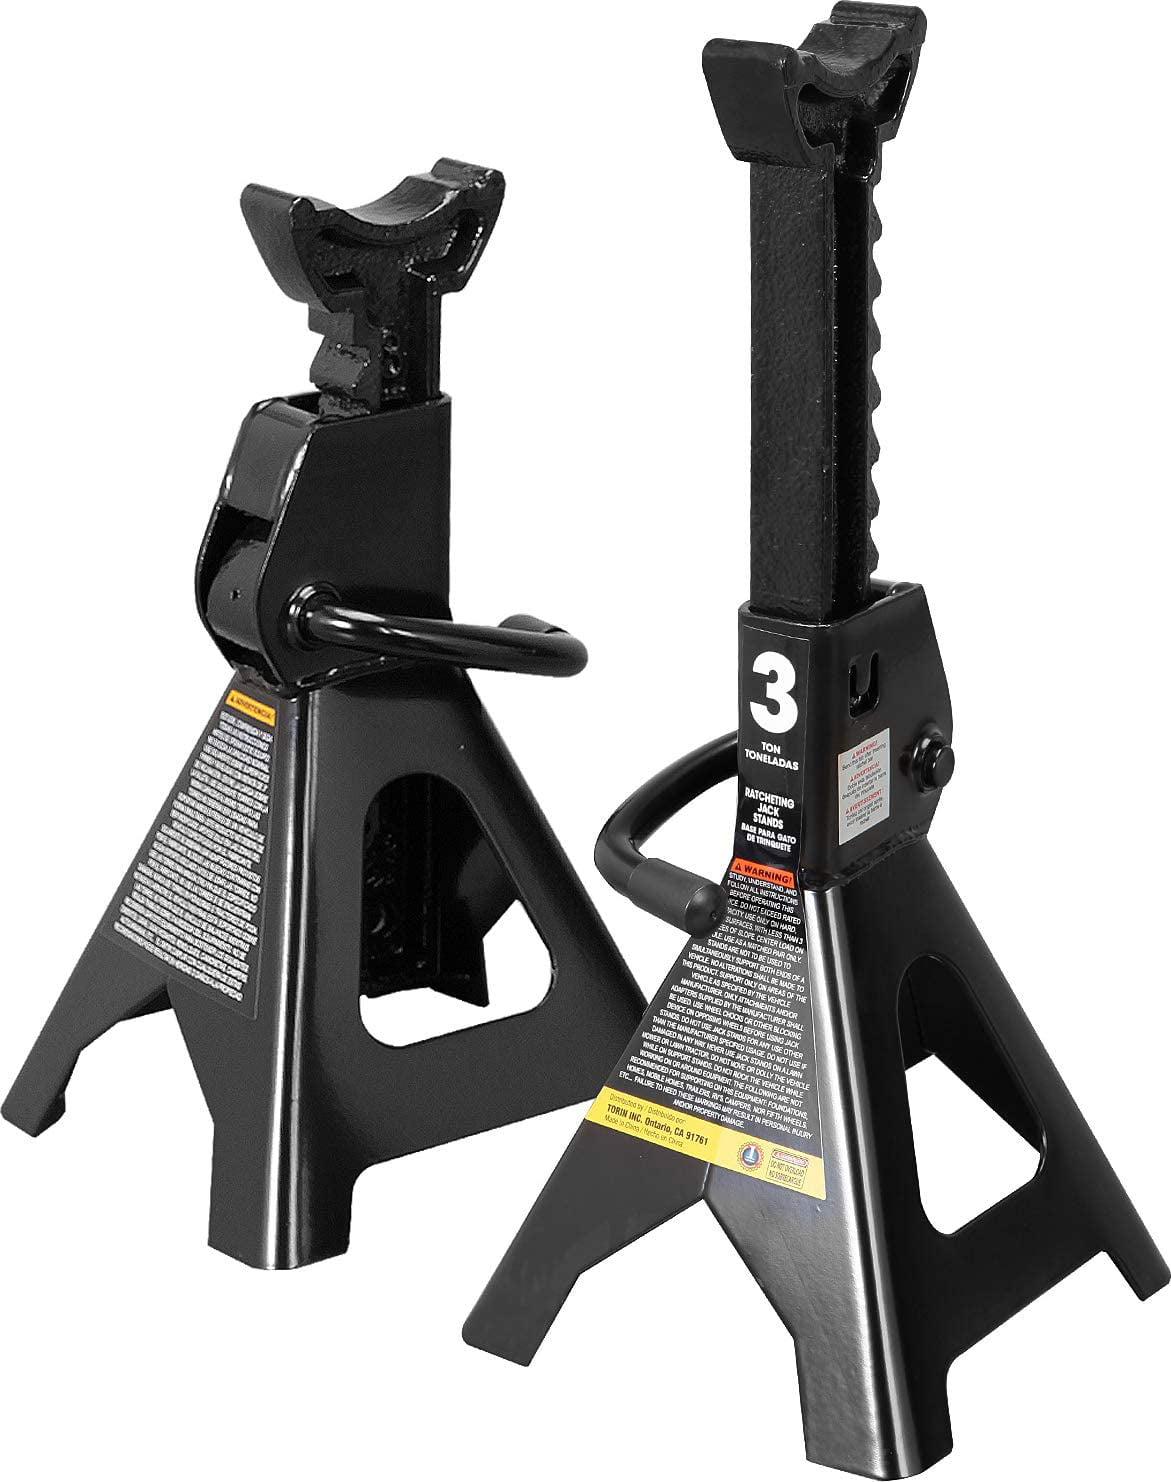 Torin DT43202B Steel Jack Stands: 3 Ton (6,000 lb) Capacity, Black, 1 Pair - Walmart.com $28.17